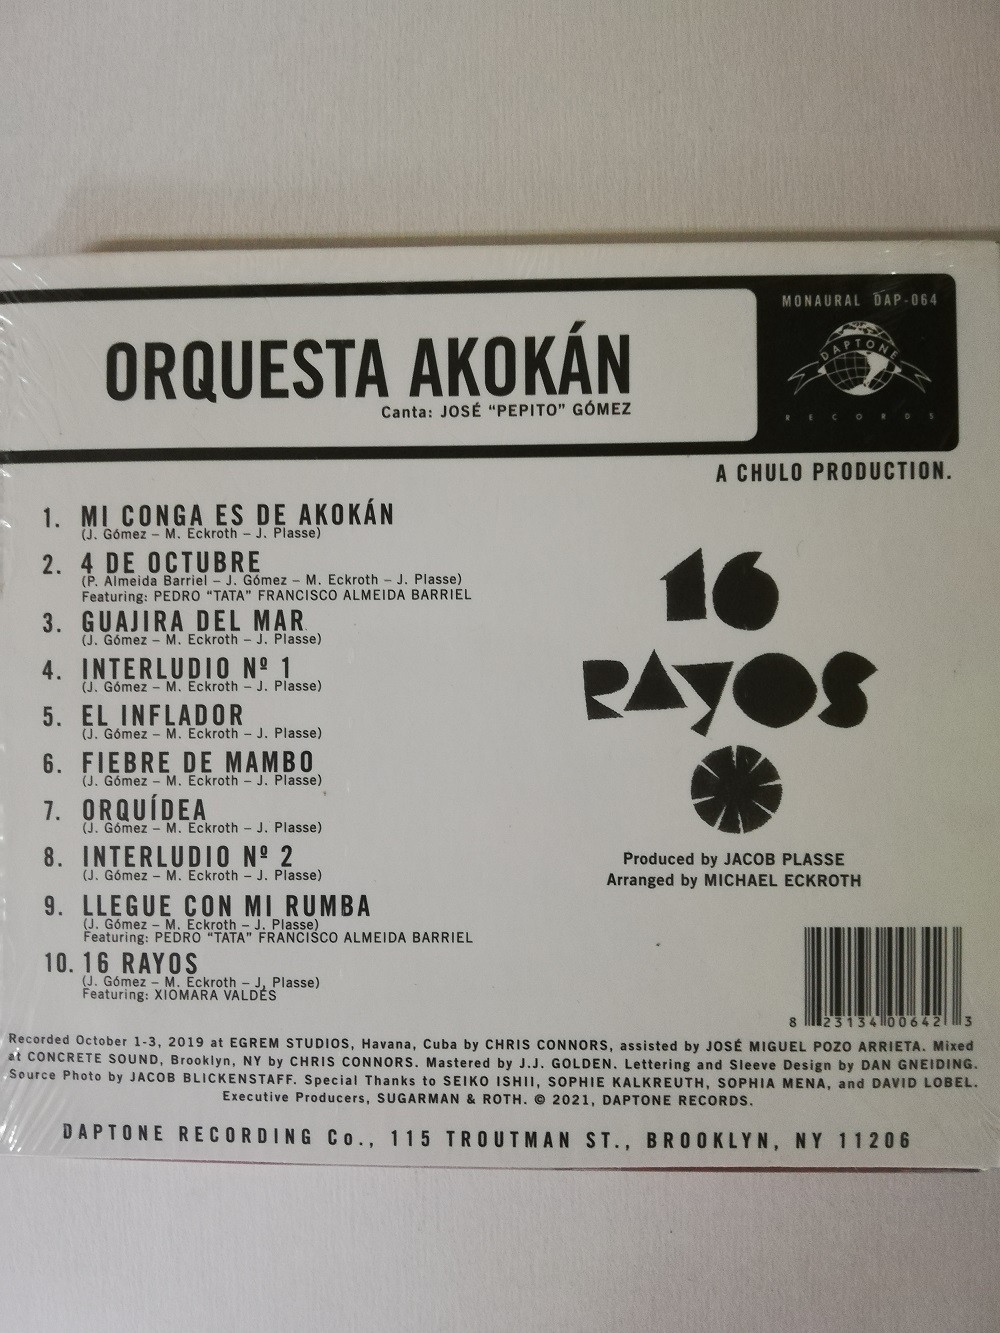 Imagen CD ORQUESTA AKOKÁN - 16 RAYOS 2